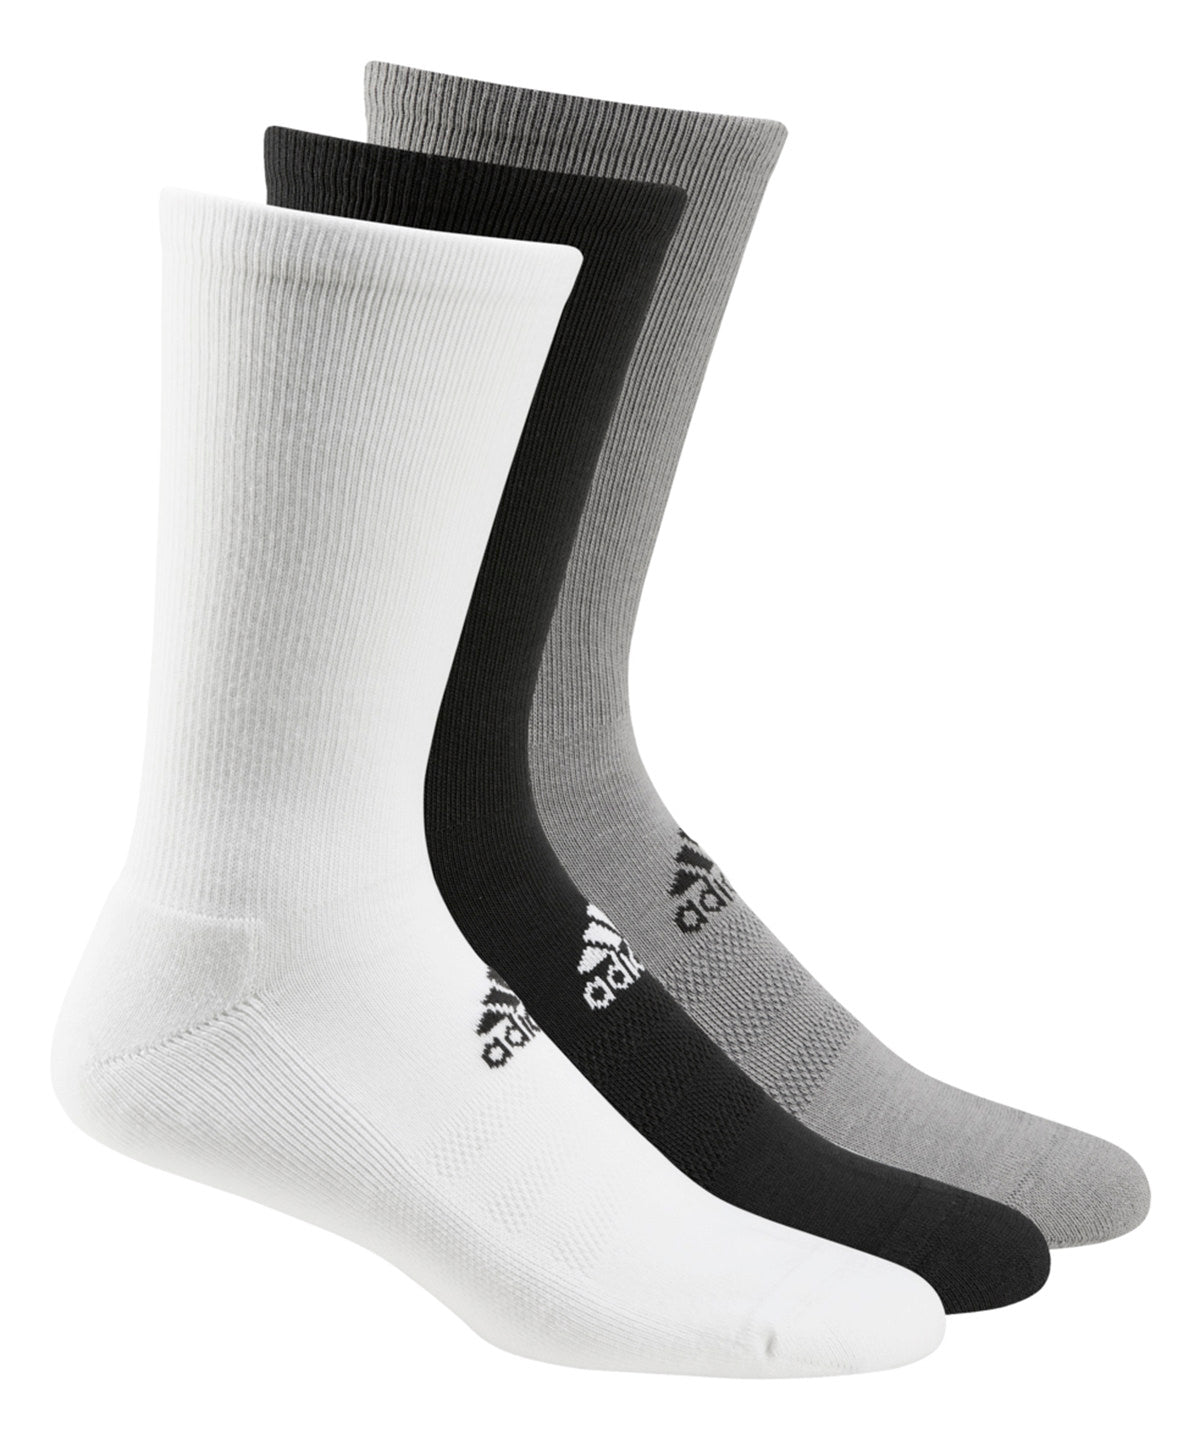 Stockings - Socks